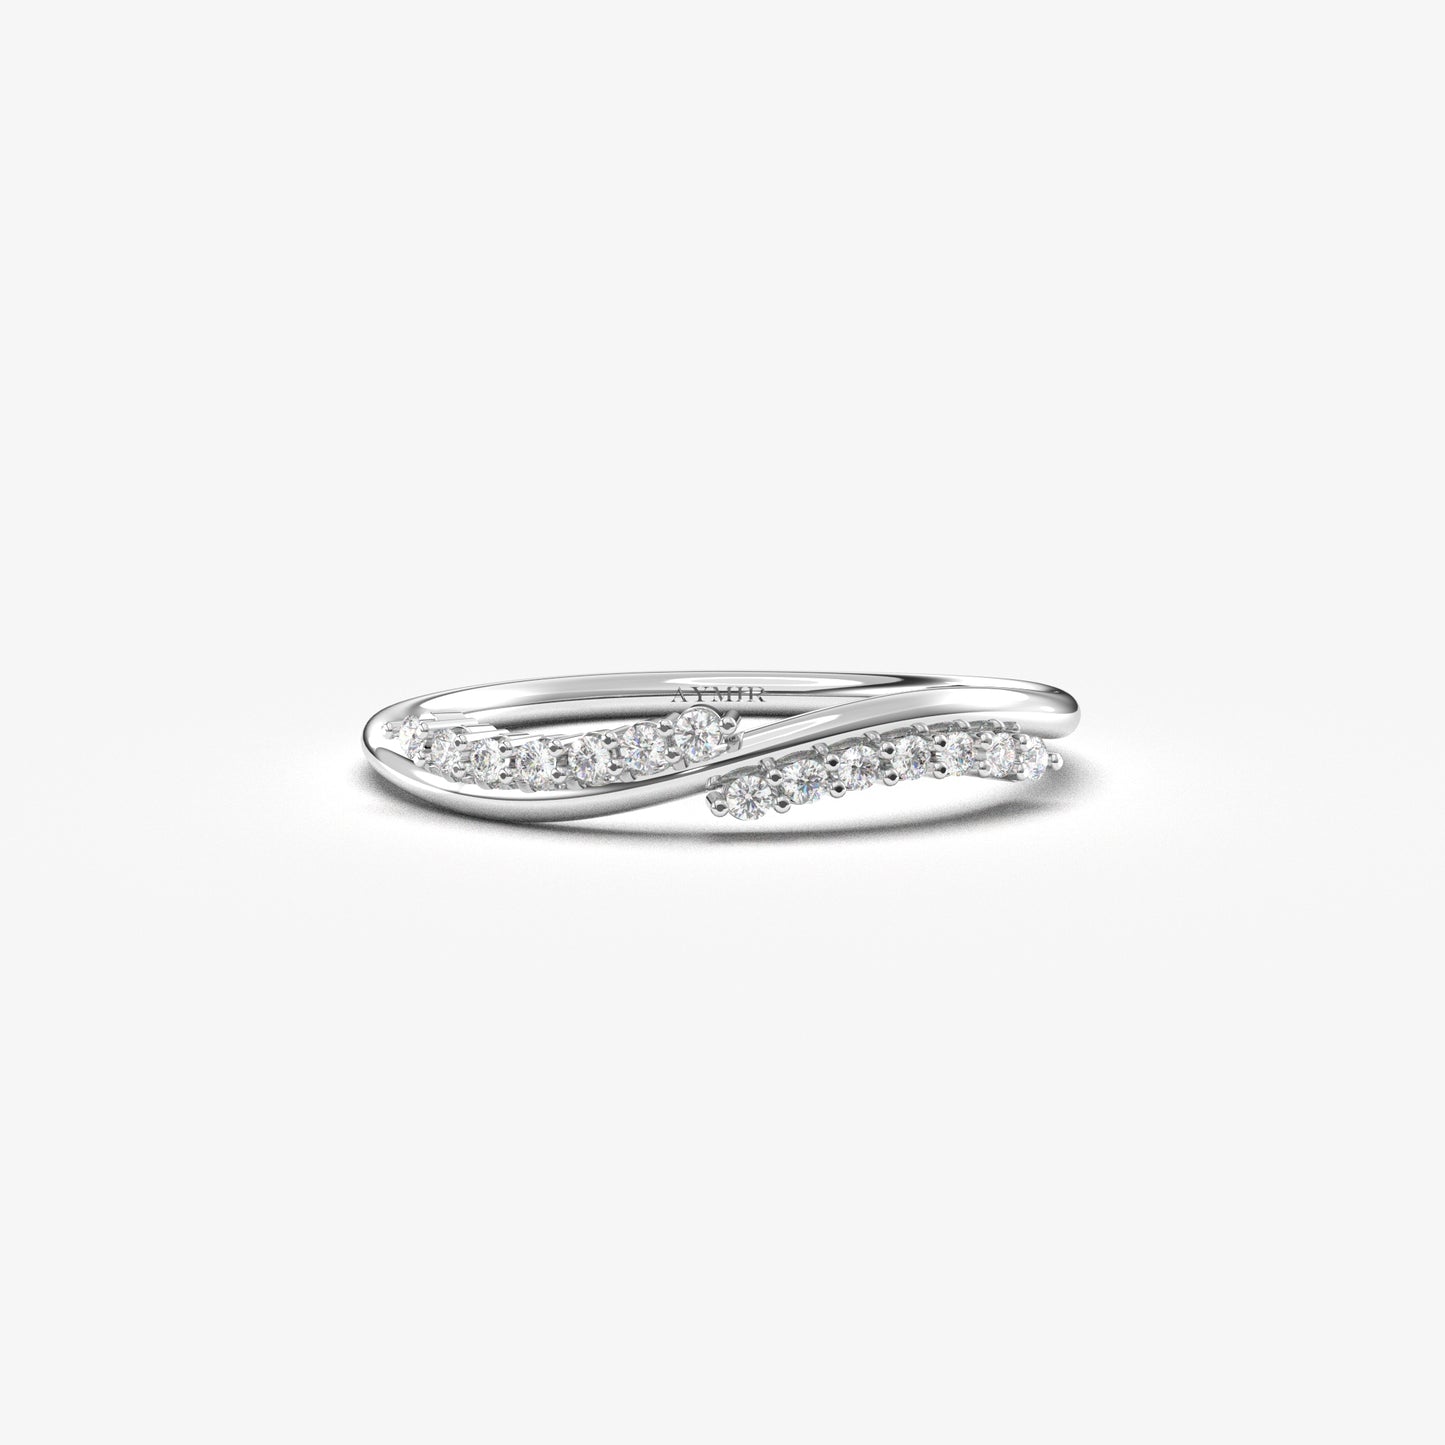 18K Gold Curved Diamond Wedding Ring - 2S185